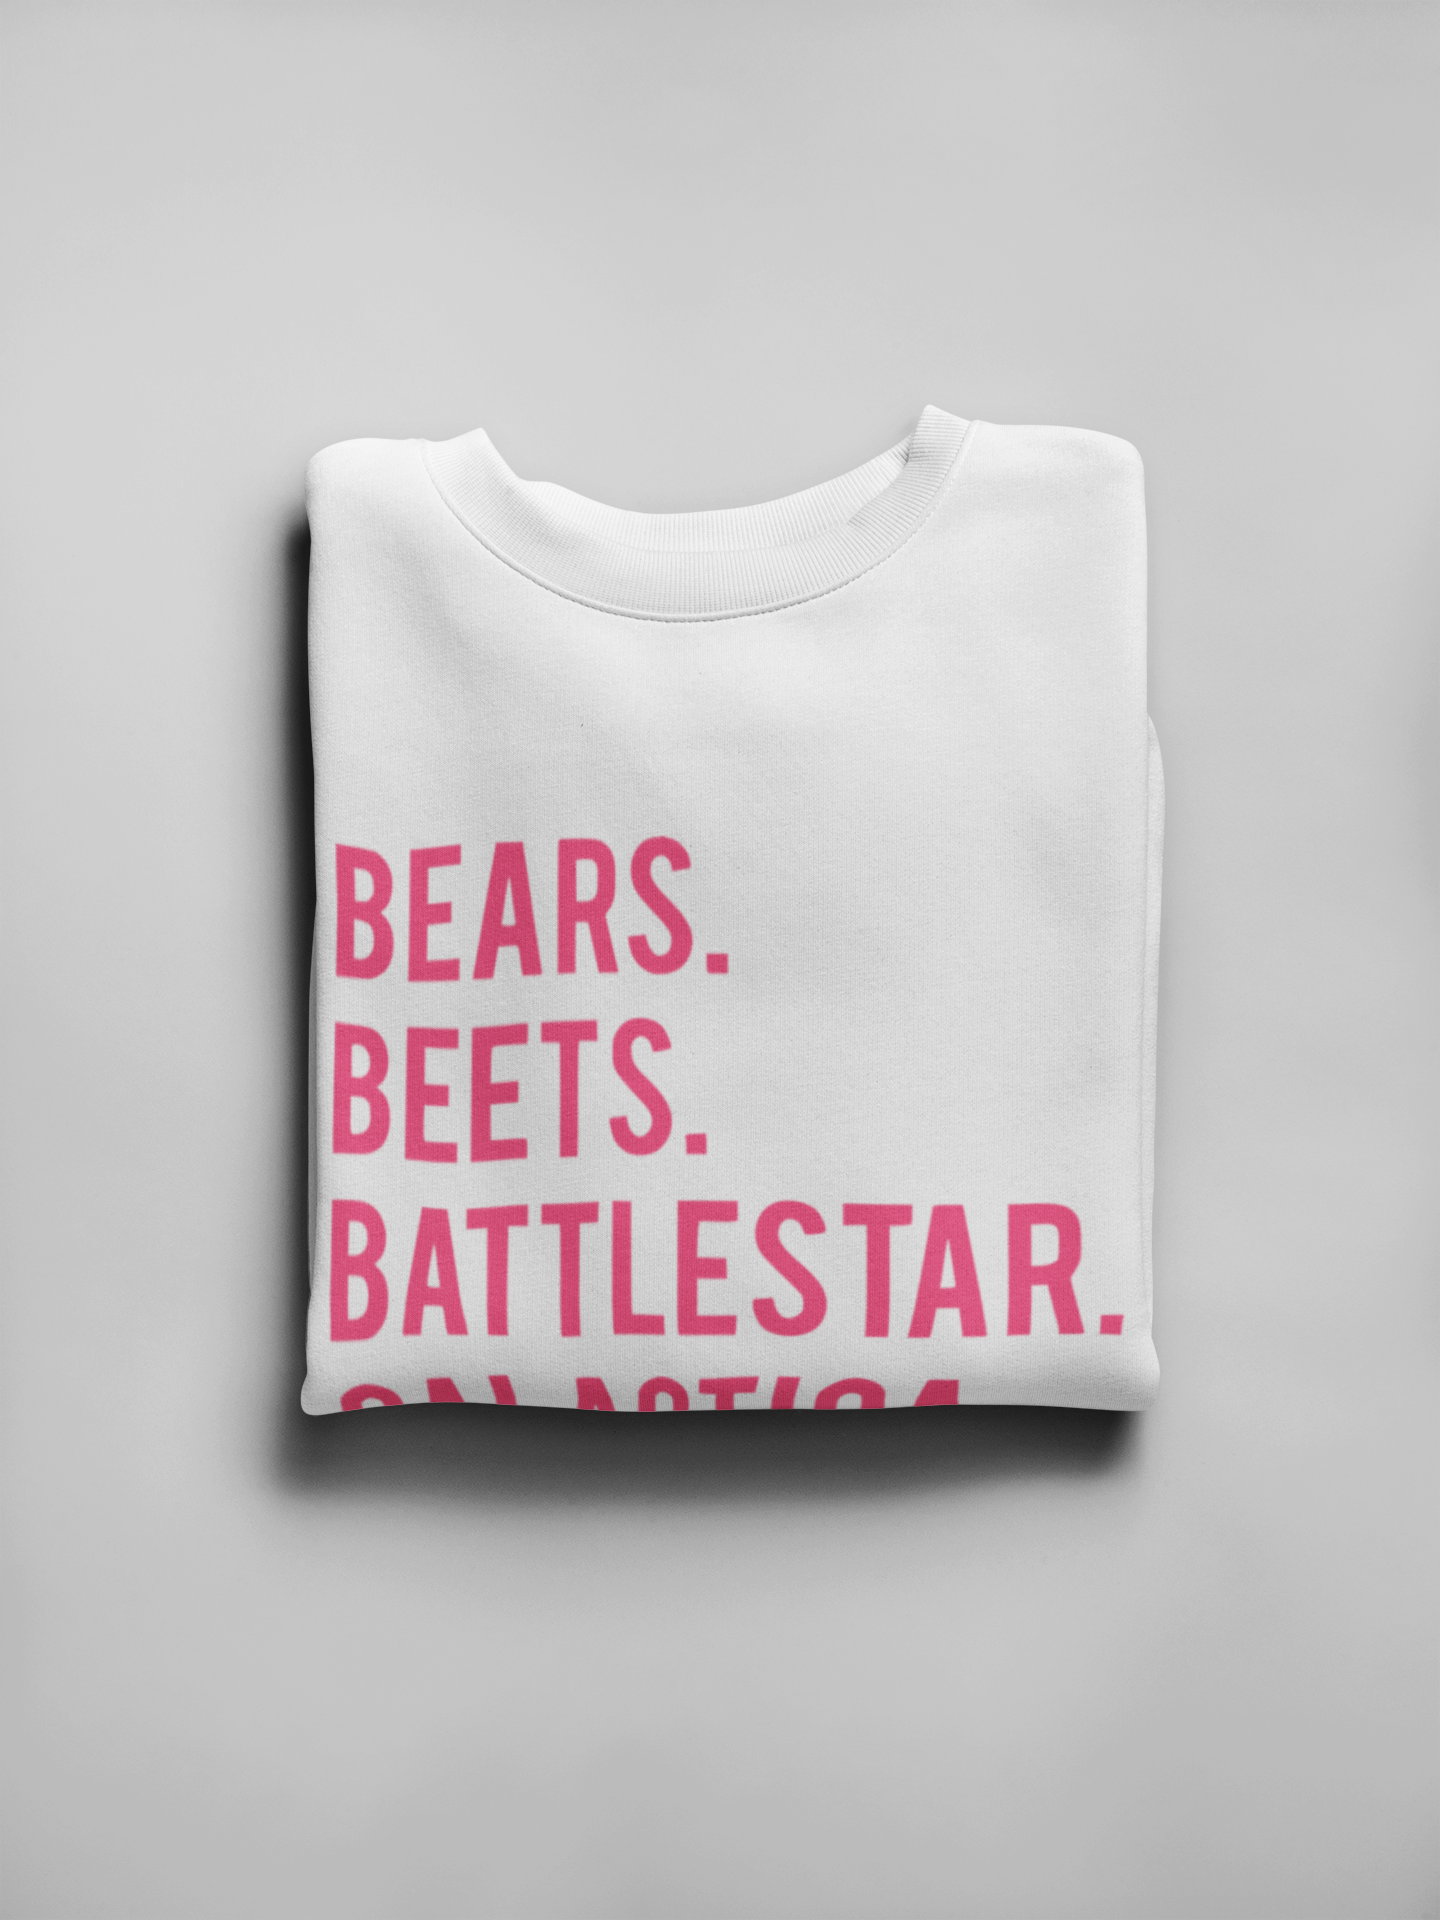 Bears Beats Battlestar Galactica -  Unisex Premium Sweatshirt Looper Tees